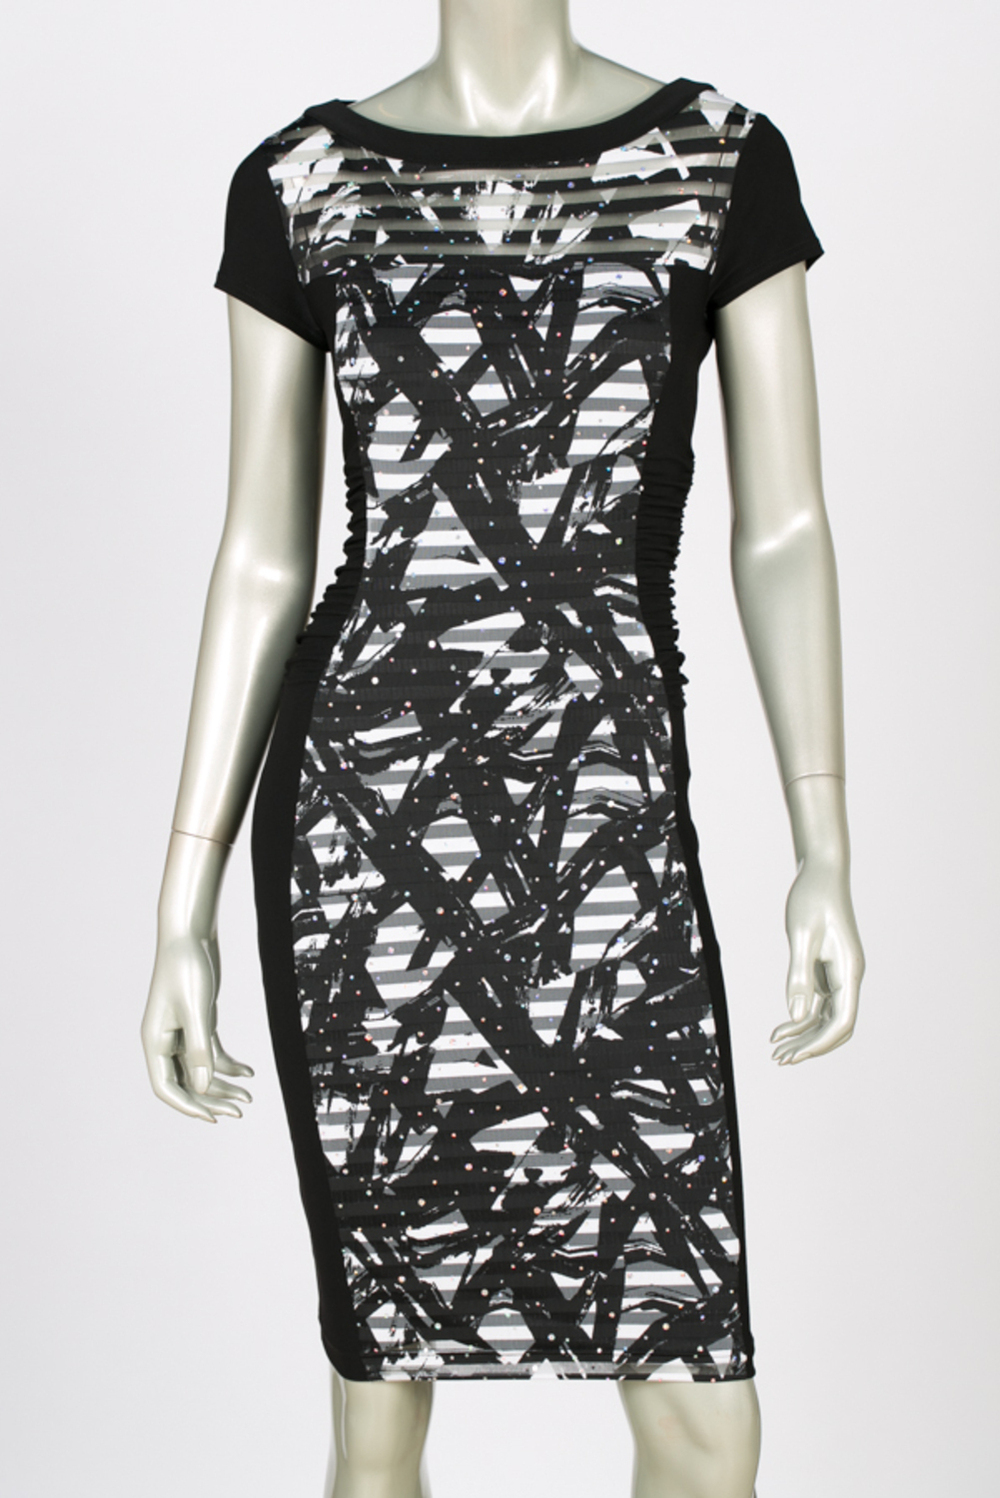 Joseph Ribkoff dress style 143900. Black/white